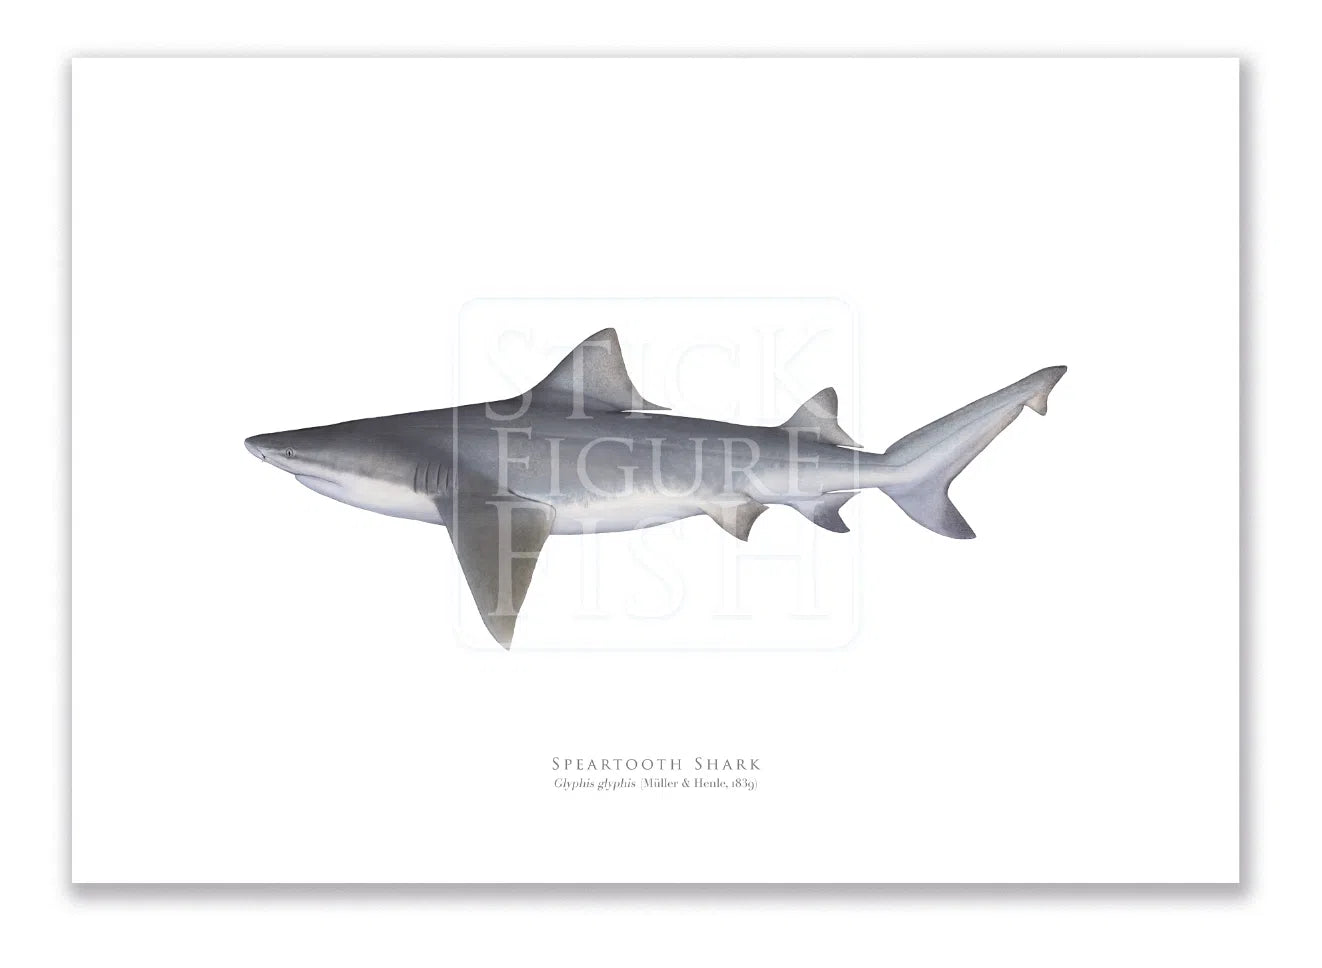 Speartooth Shark, Glyphis glyphis (Müller & Henle 1839) - Fine Art Print-Stick Figure Fish Illustration